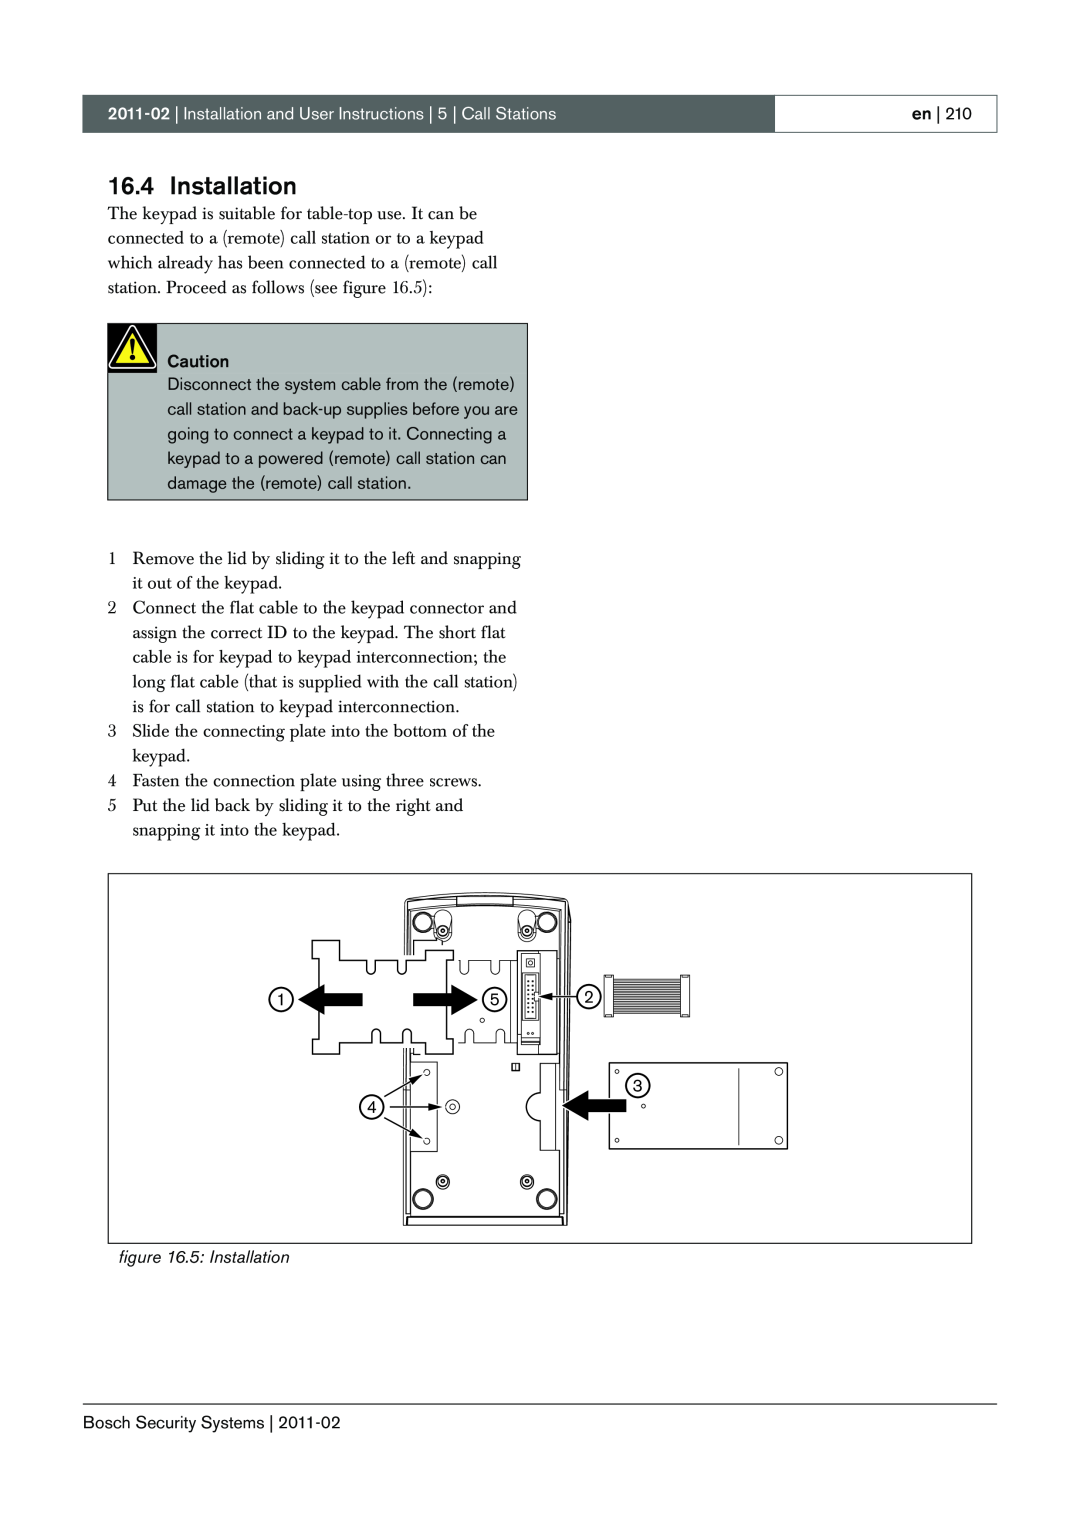 Bosch Appliances 3.5 manual 5: Installation 